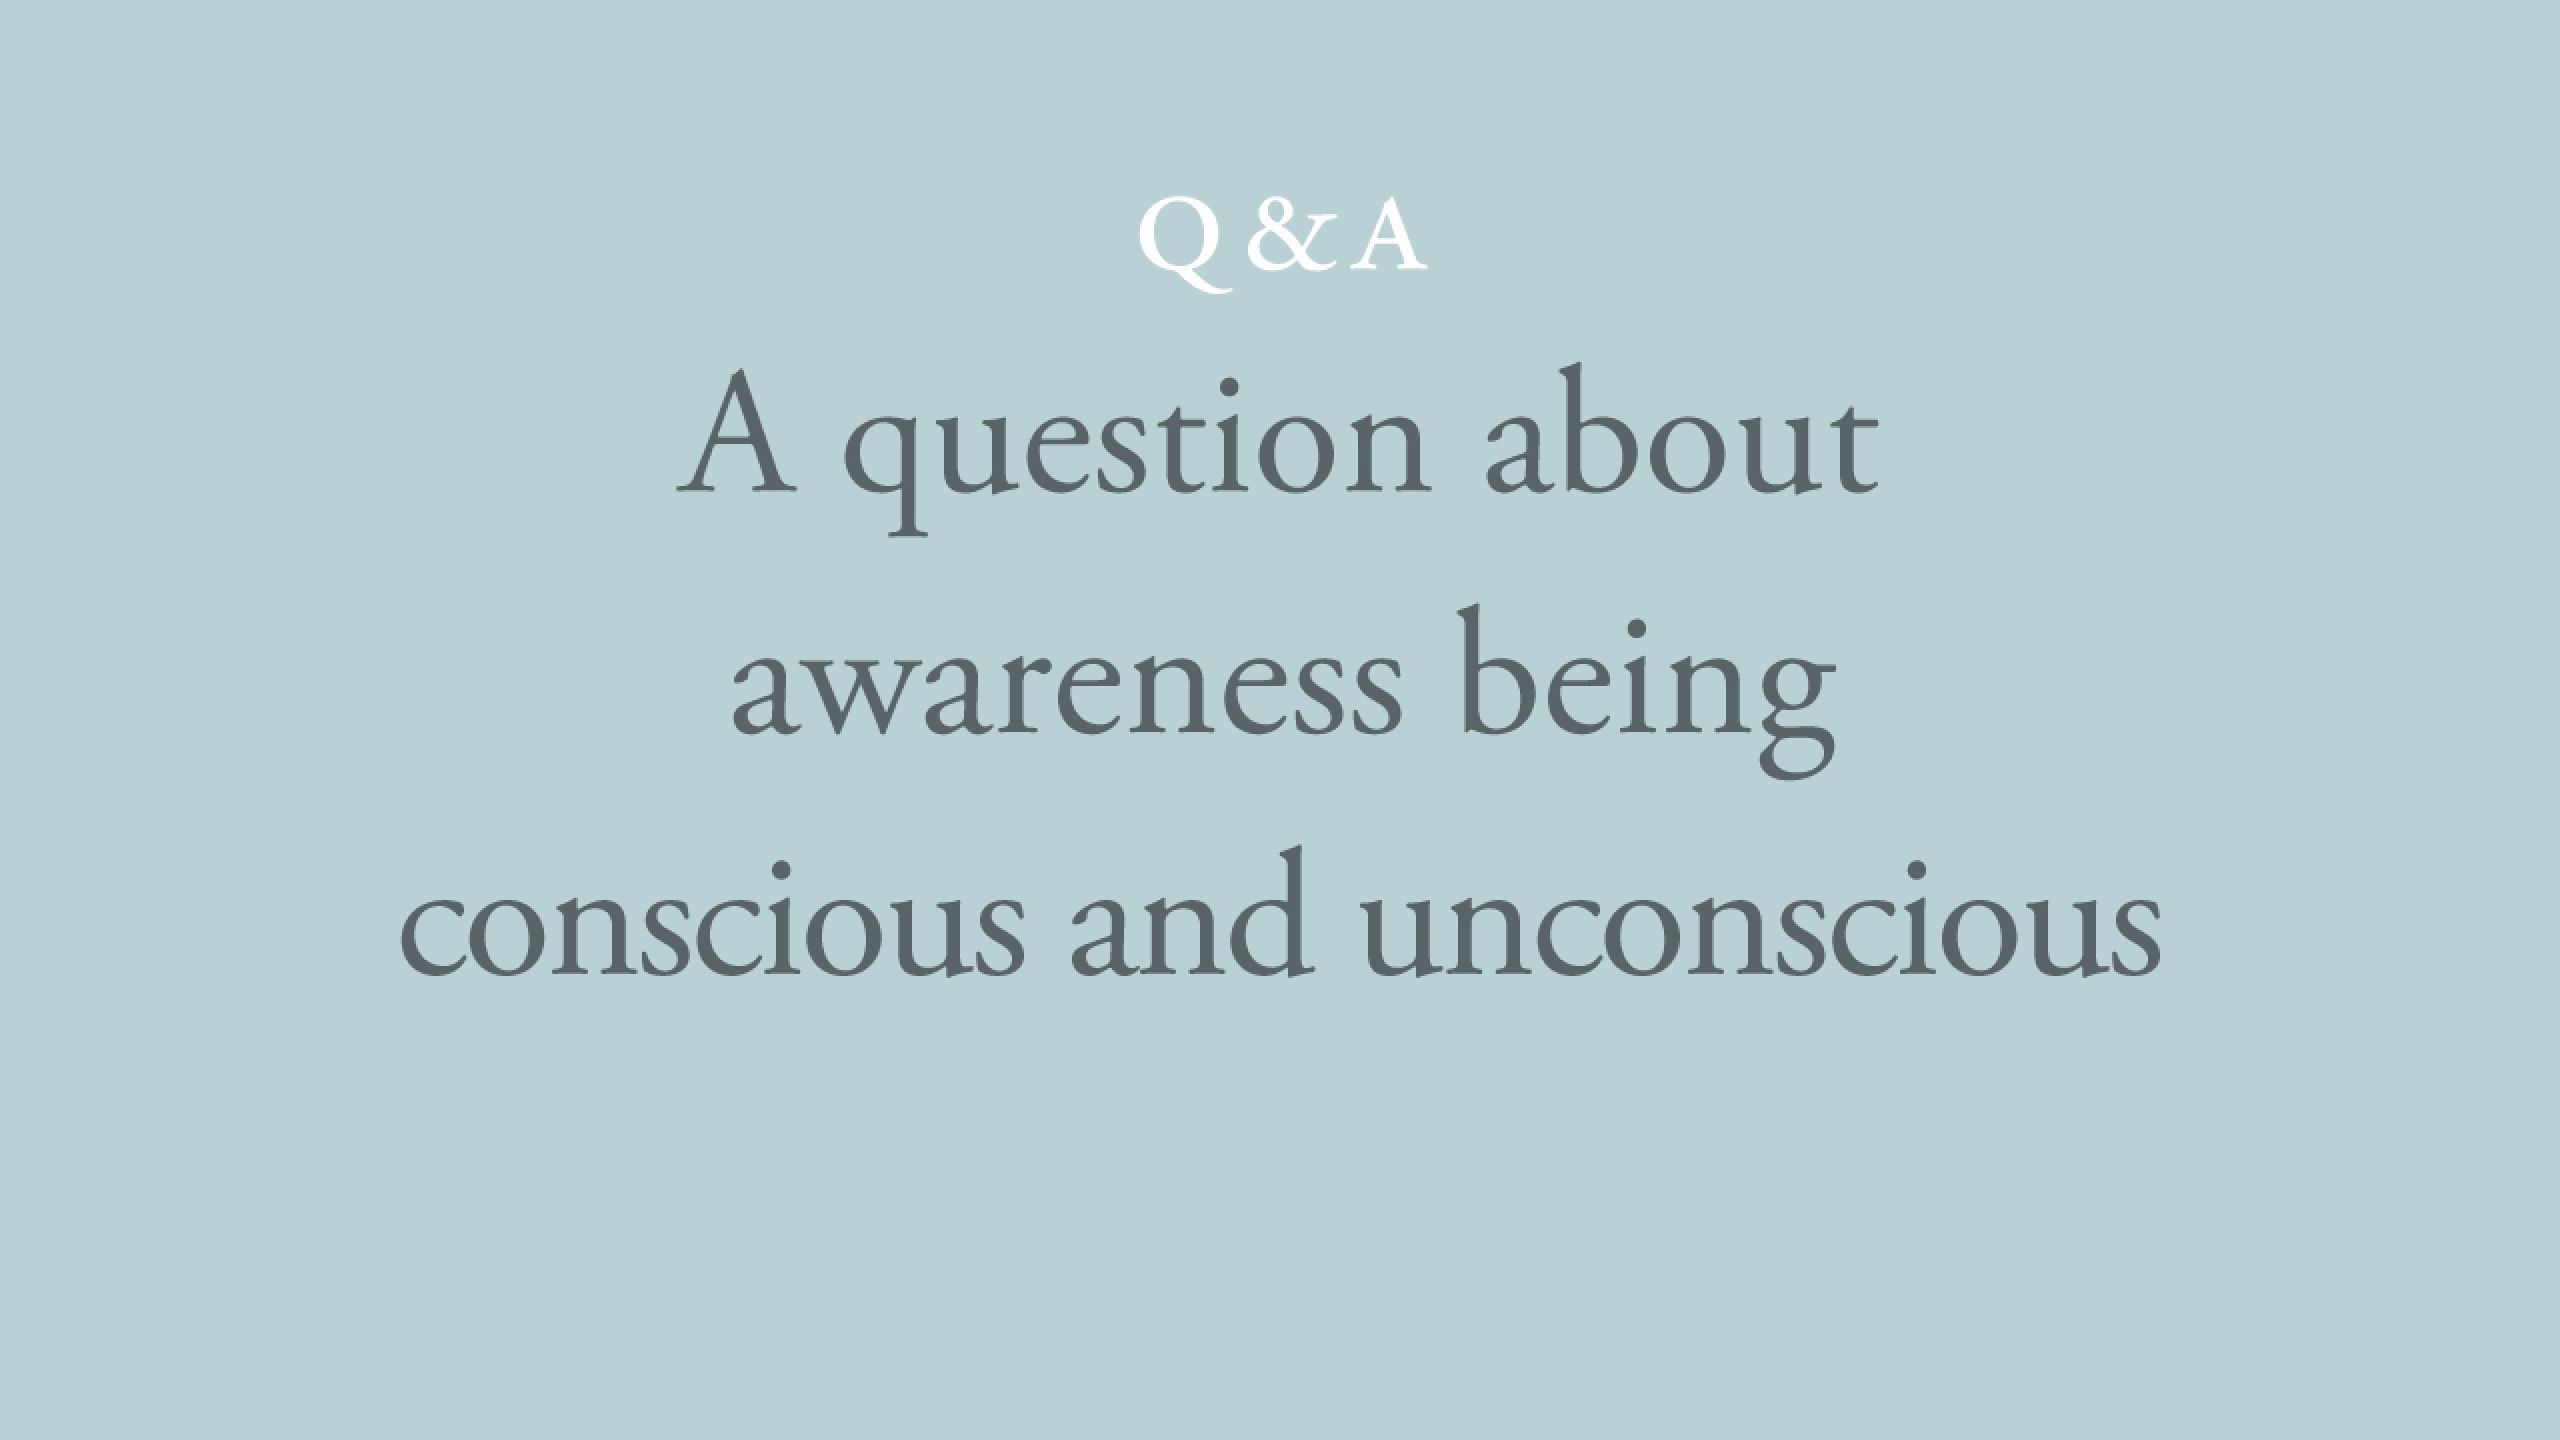 Can awareness be both conscious and unconscious? 